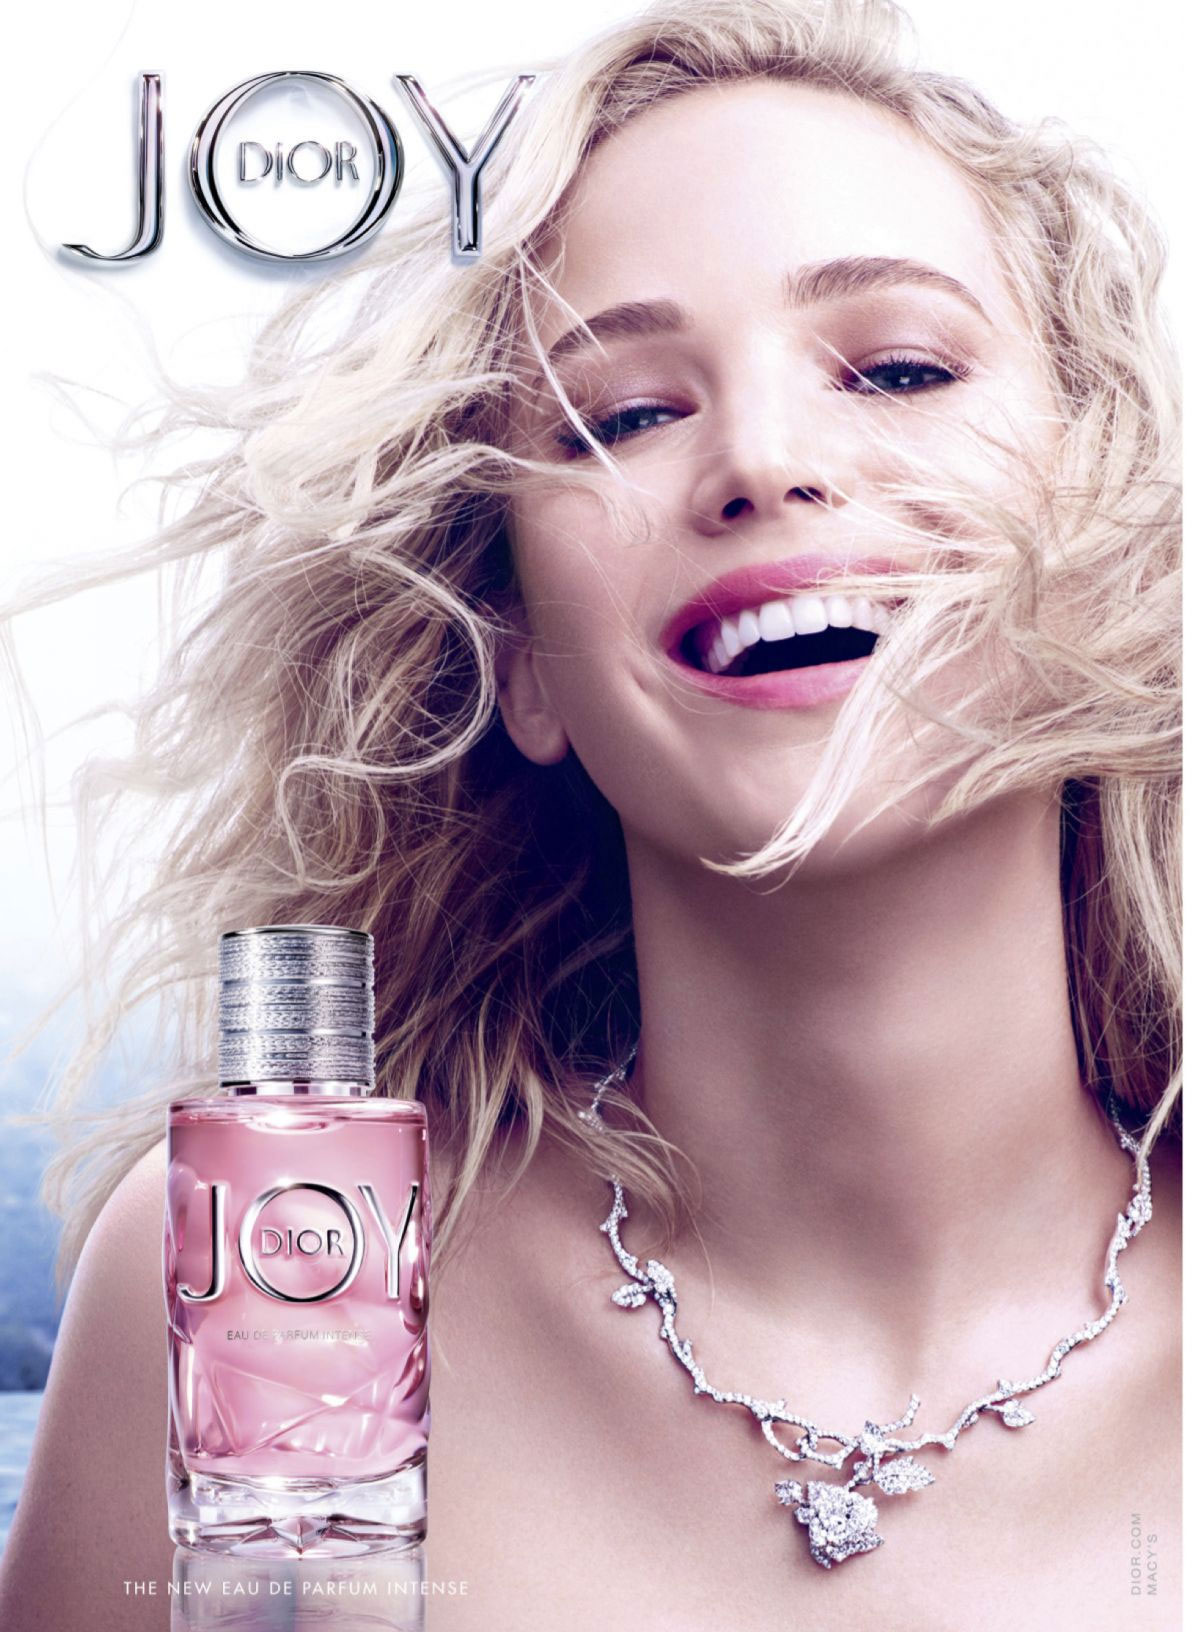 Dior Joy Intense Fragrance Ad